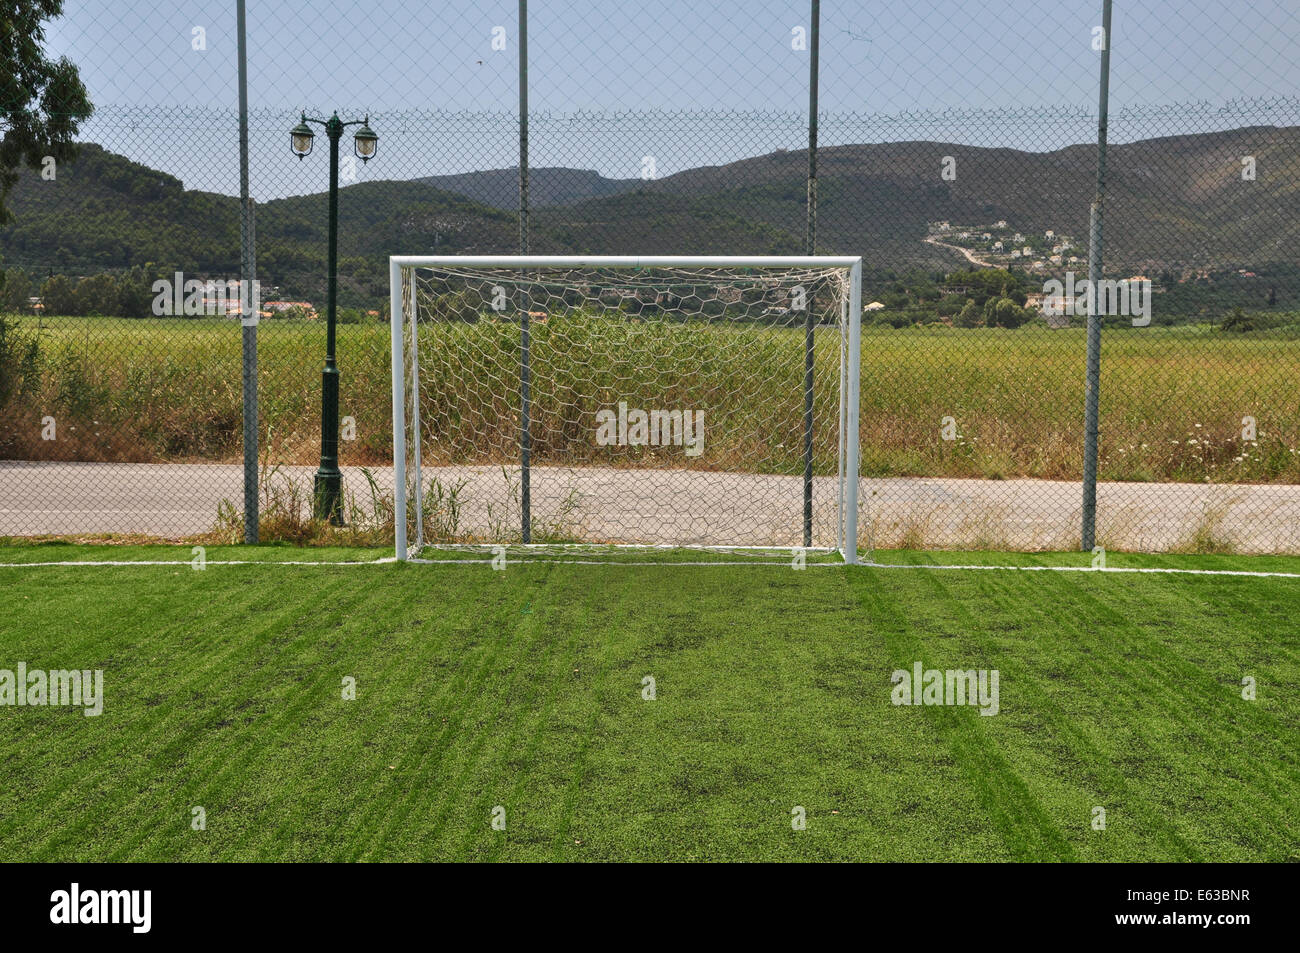 Soccer goalpost and net in empty sports field. Stock Photo